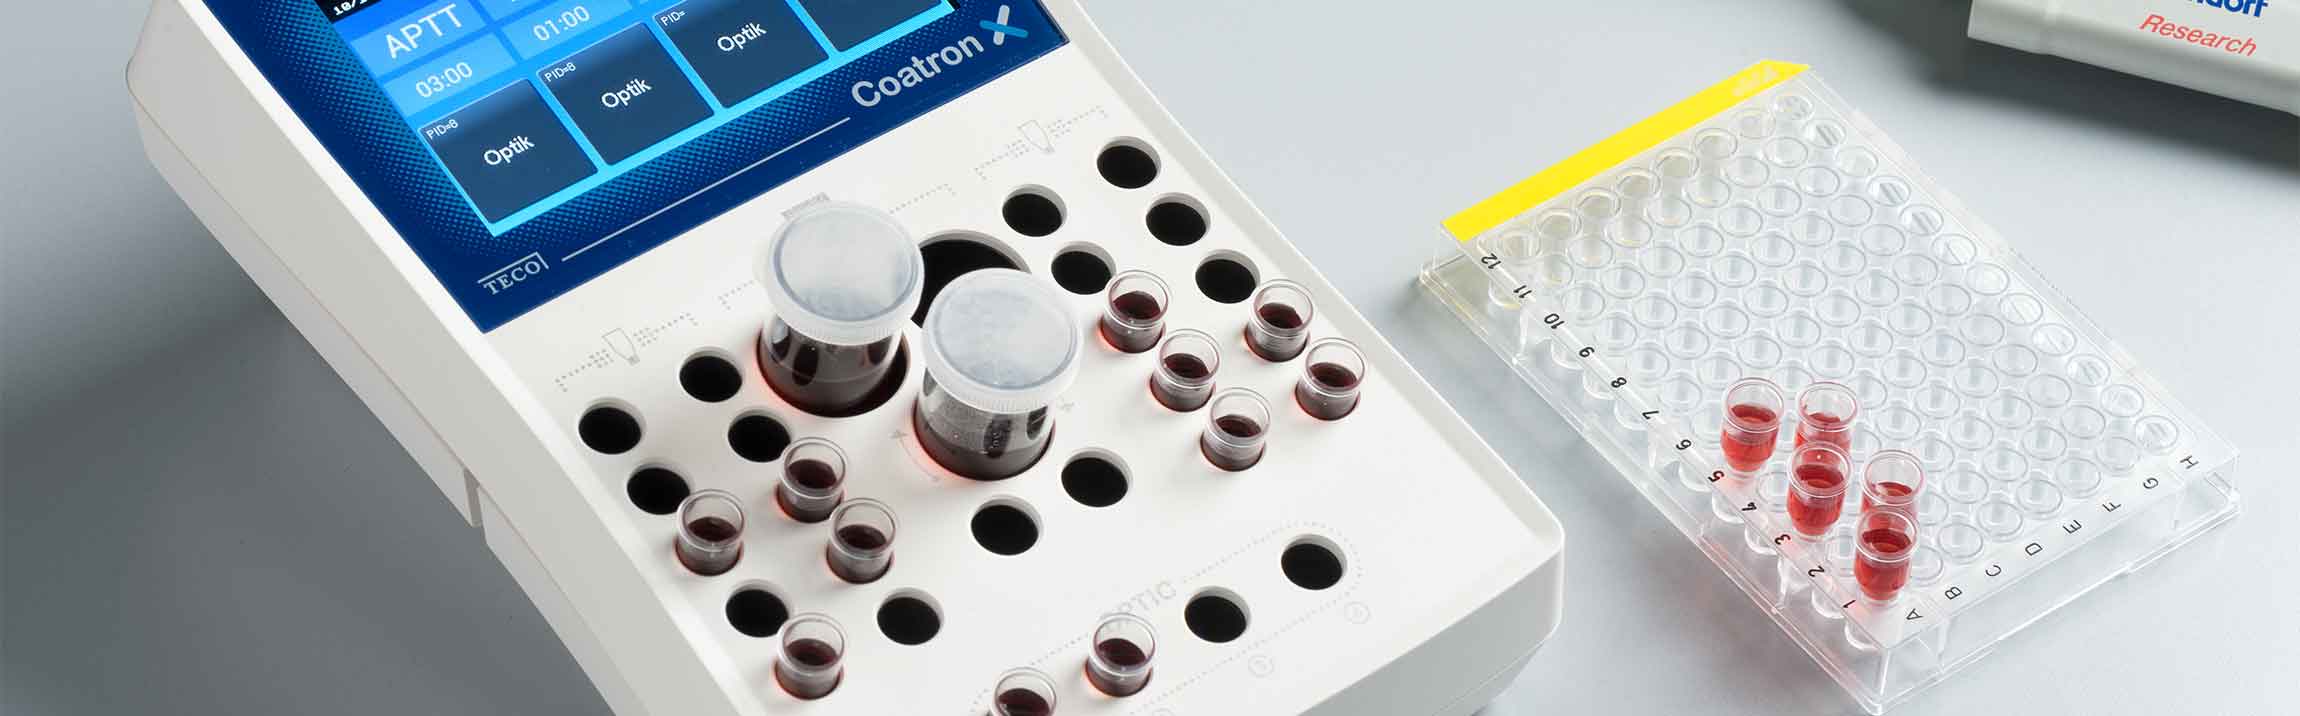 In vitro diagnostics device for measurement of blood coagulation